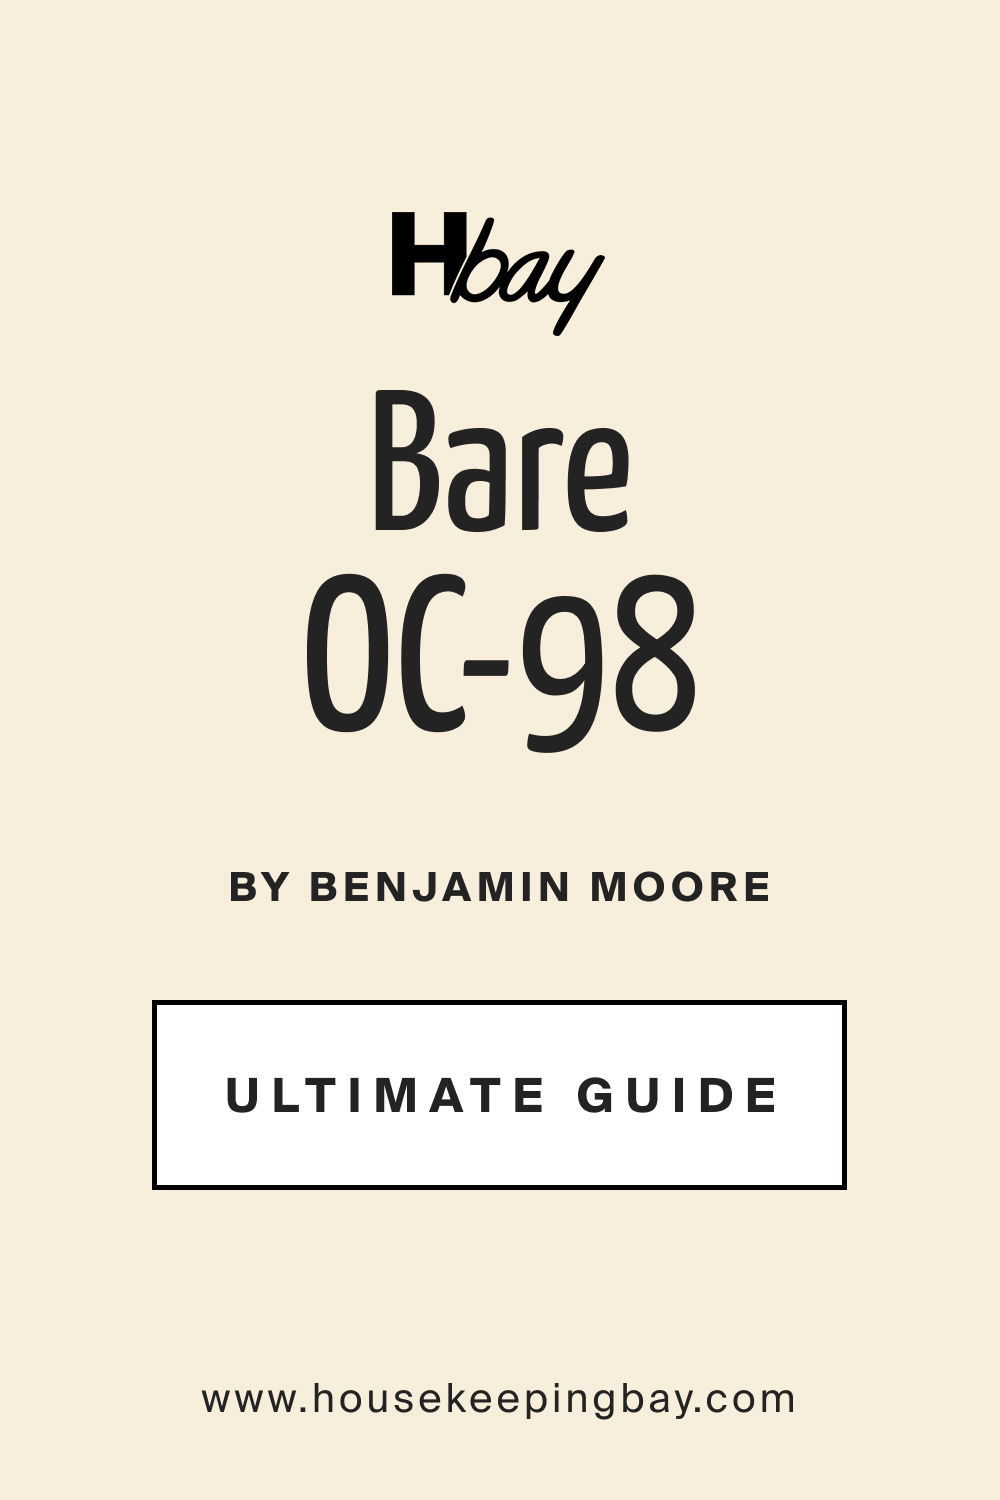 Bare OC 98 by Benjamin Moore Ultimate Guide